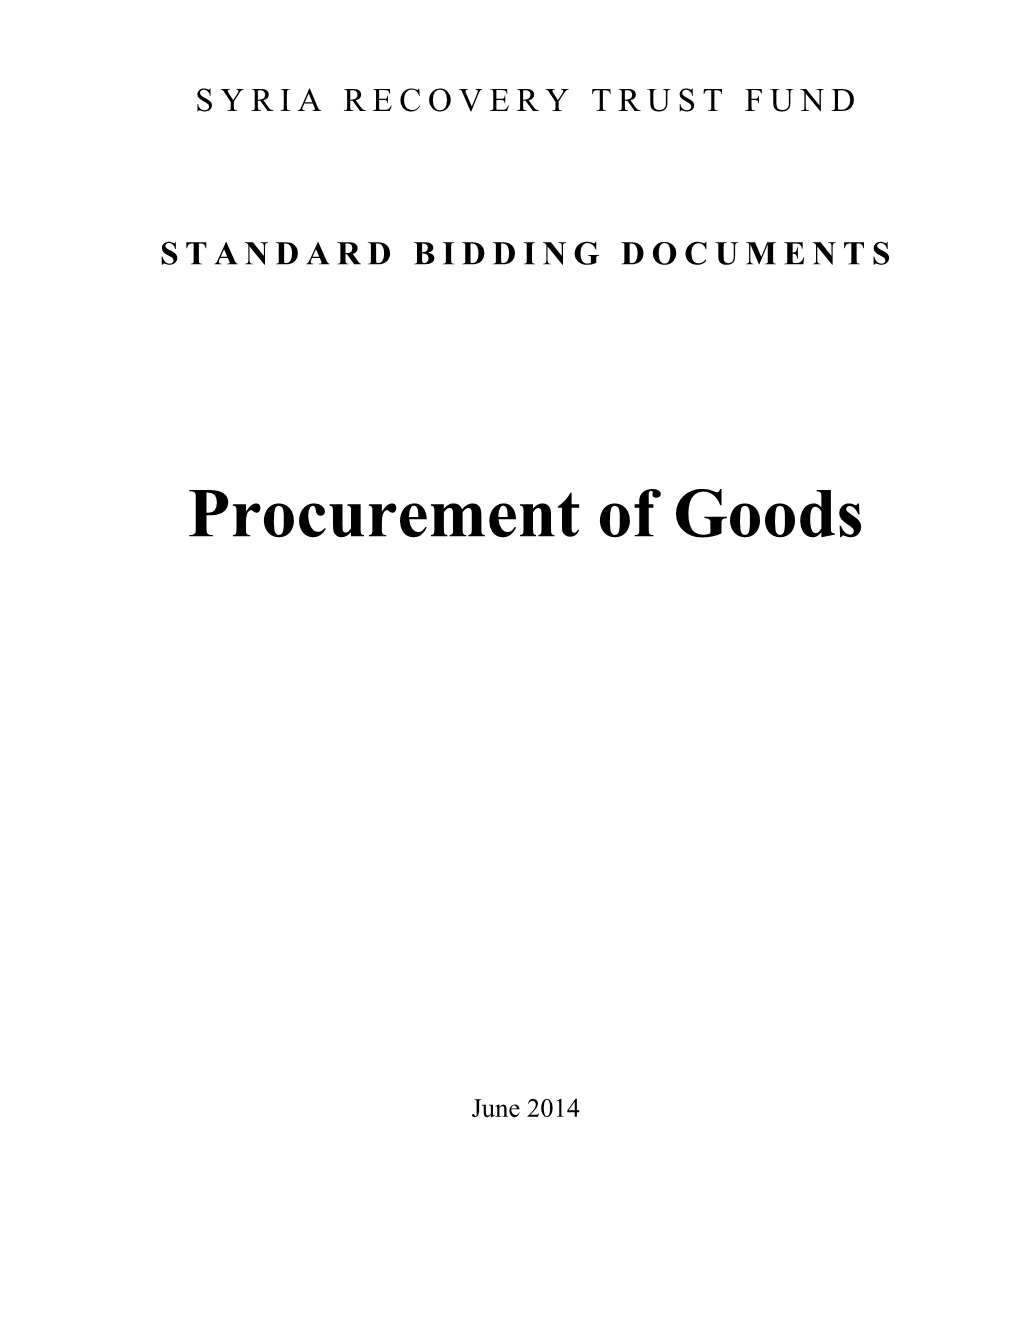 Standard Bidding Documents s16